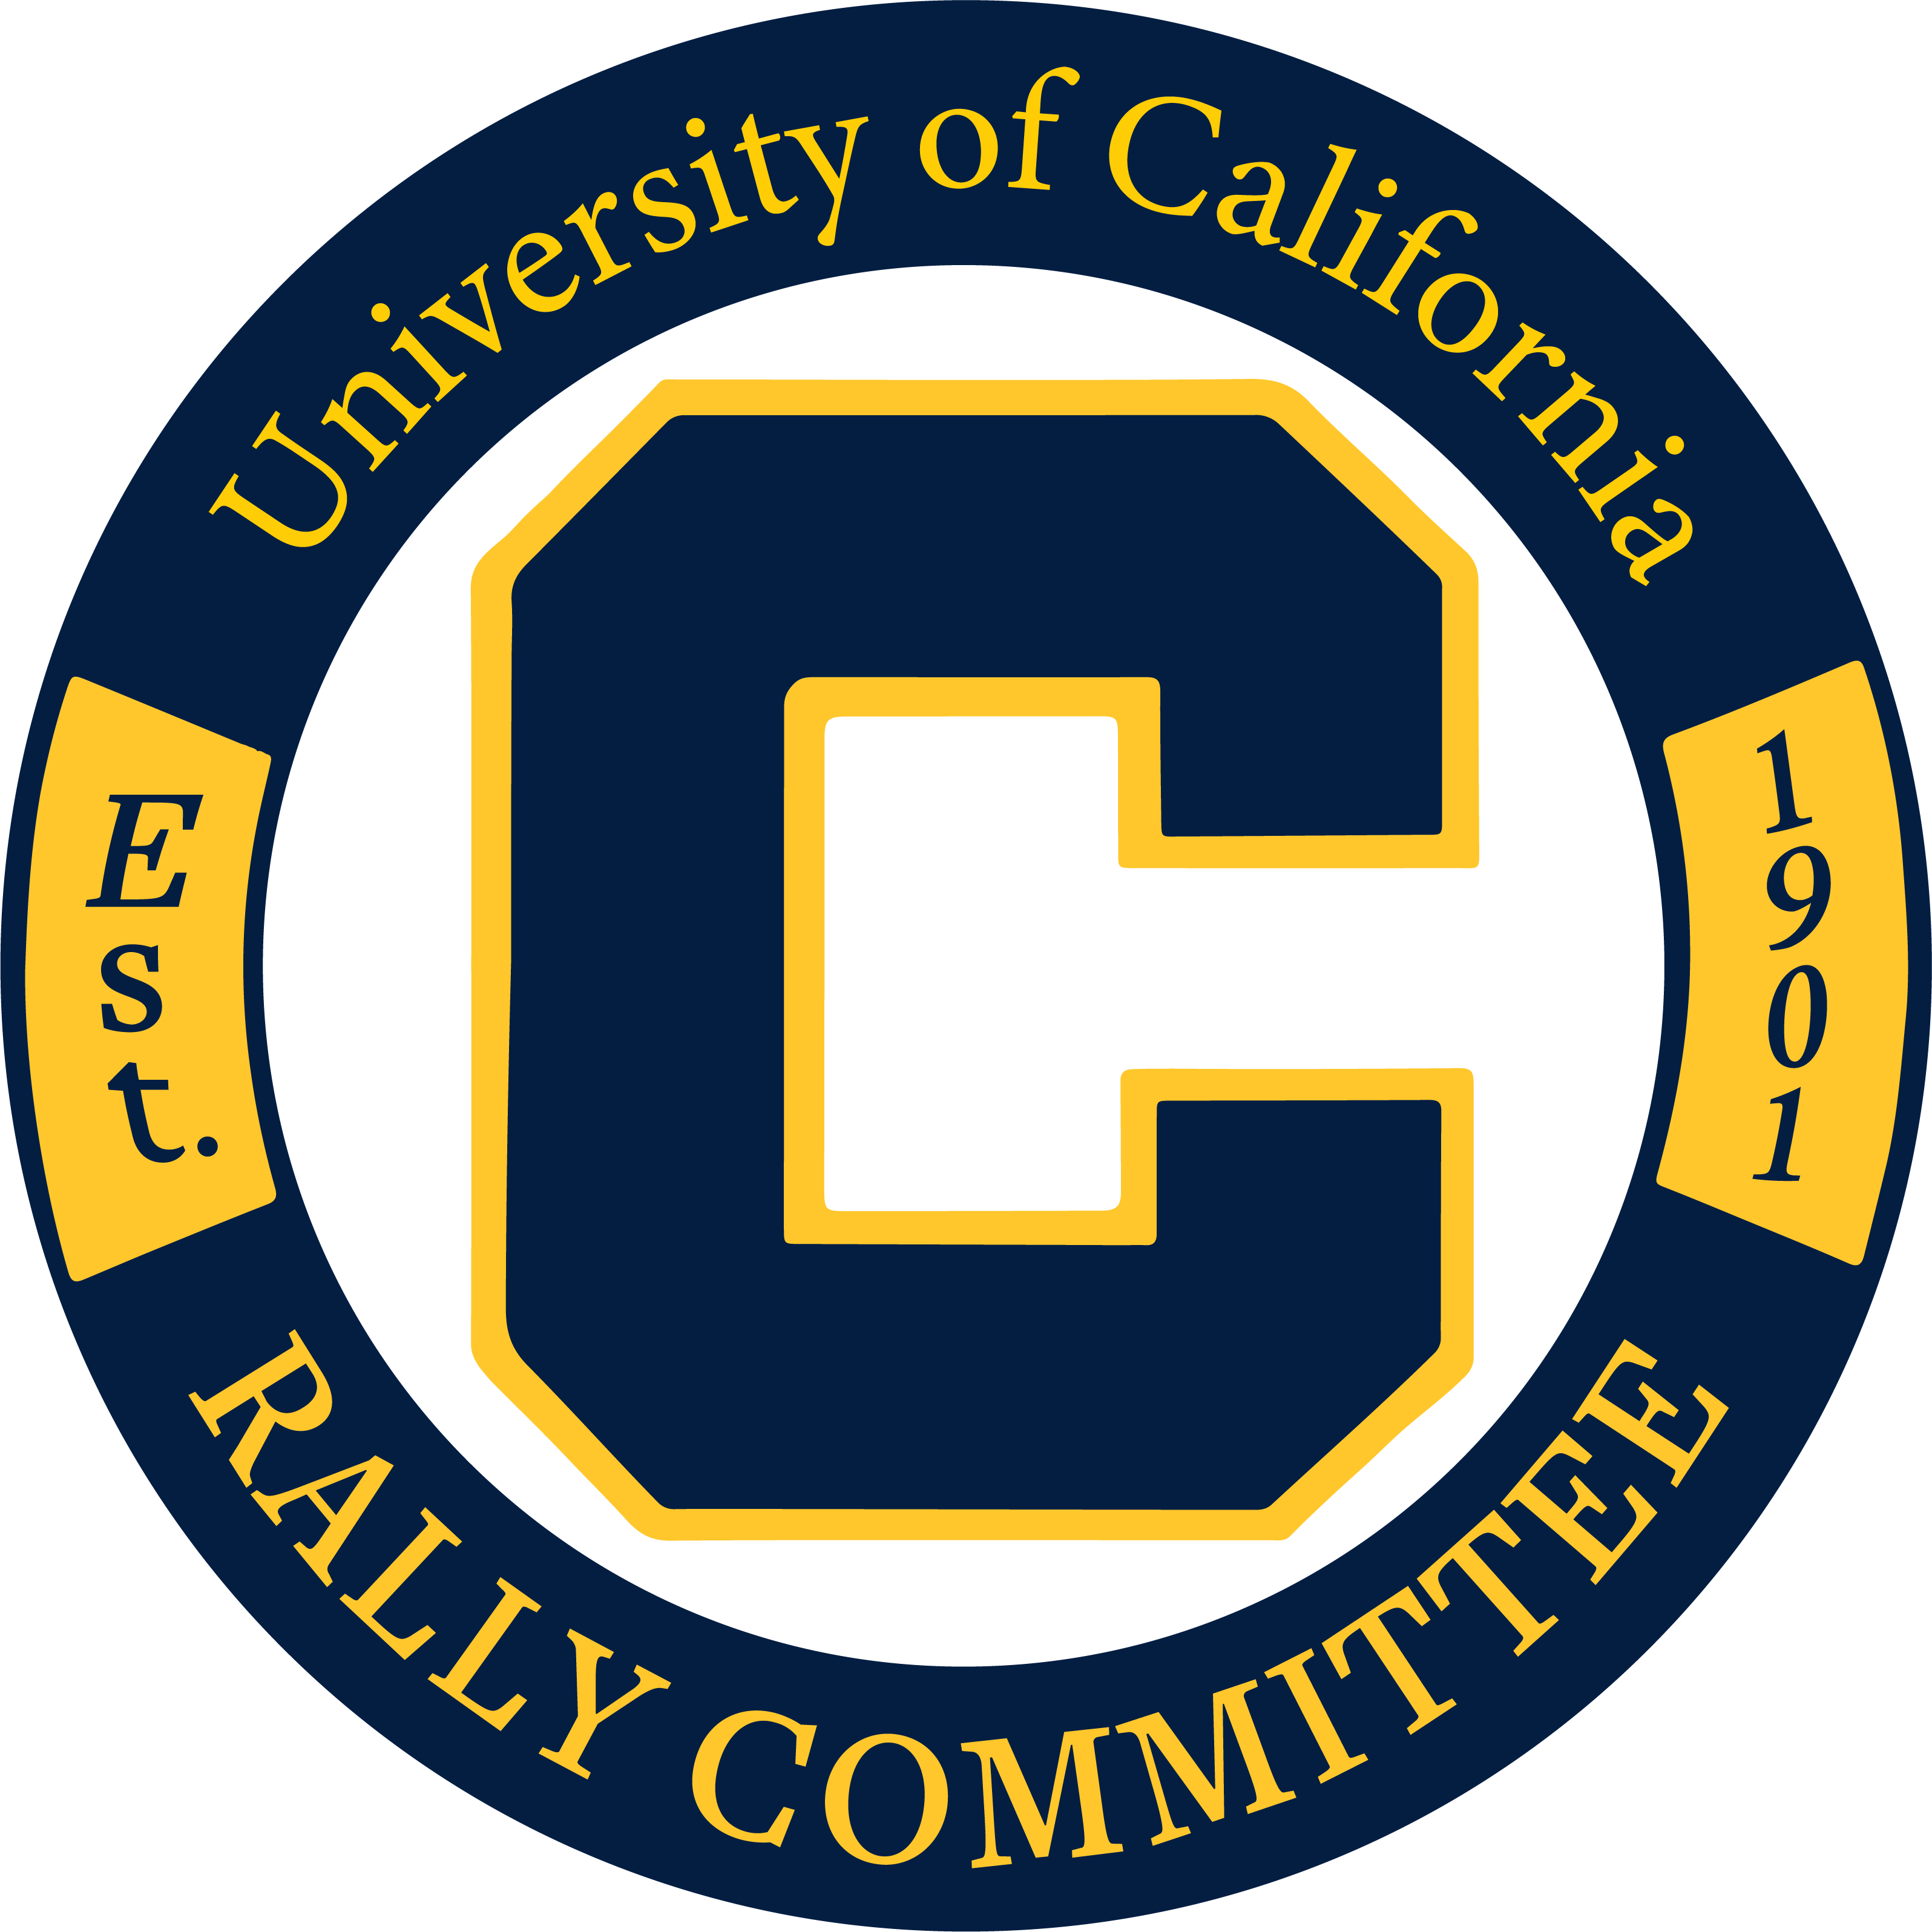 University of California Rally Committee